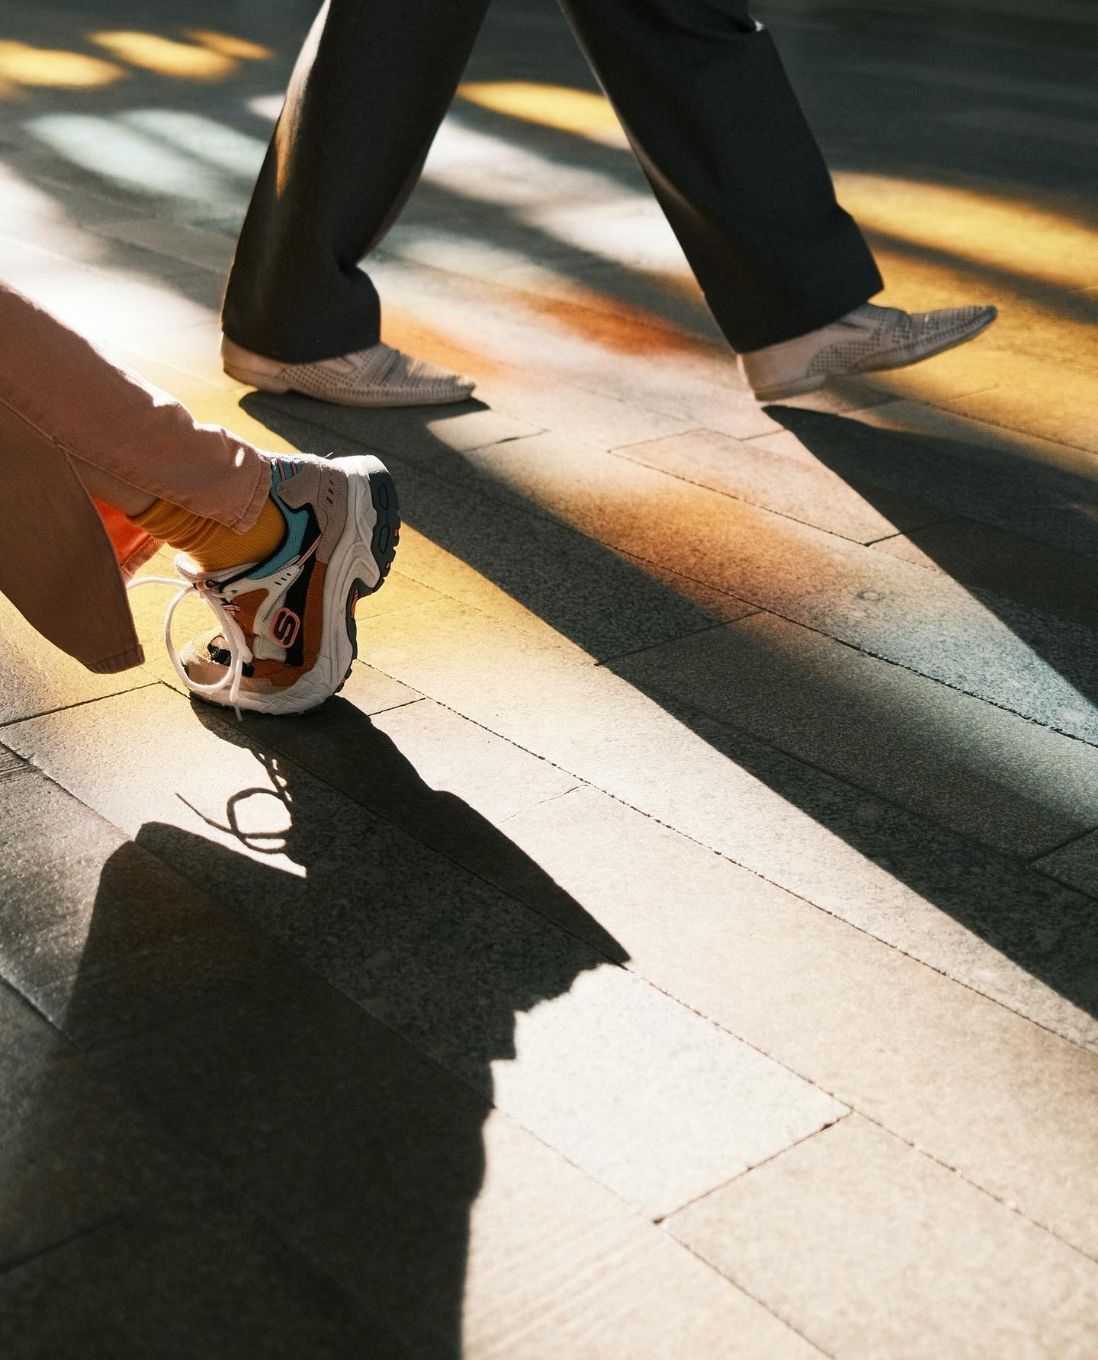 2 sets of legs and feet walking, casting a long shadow on sidewalk